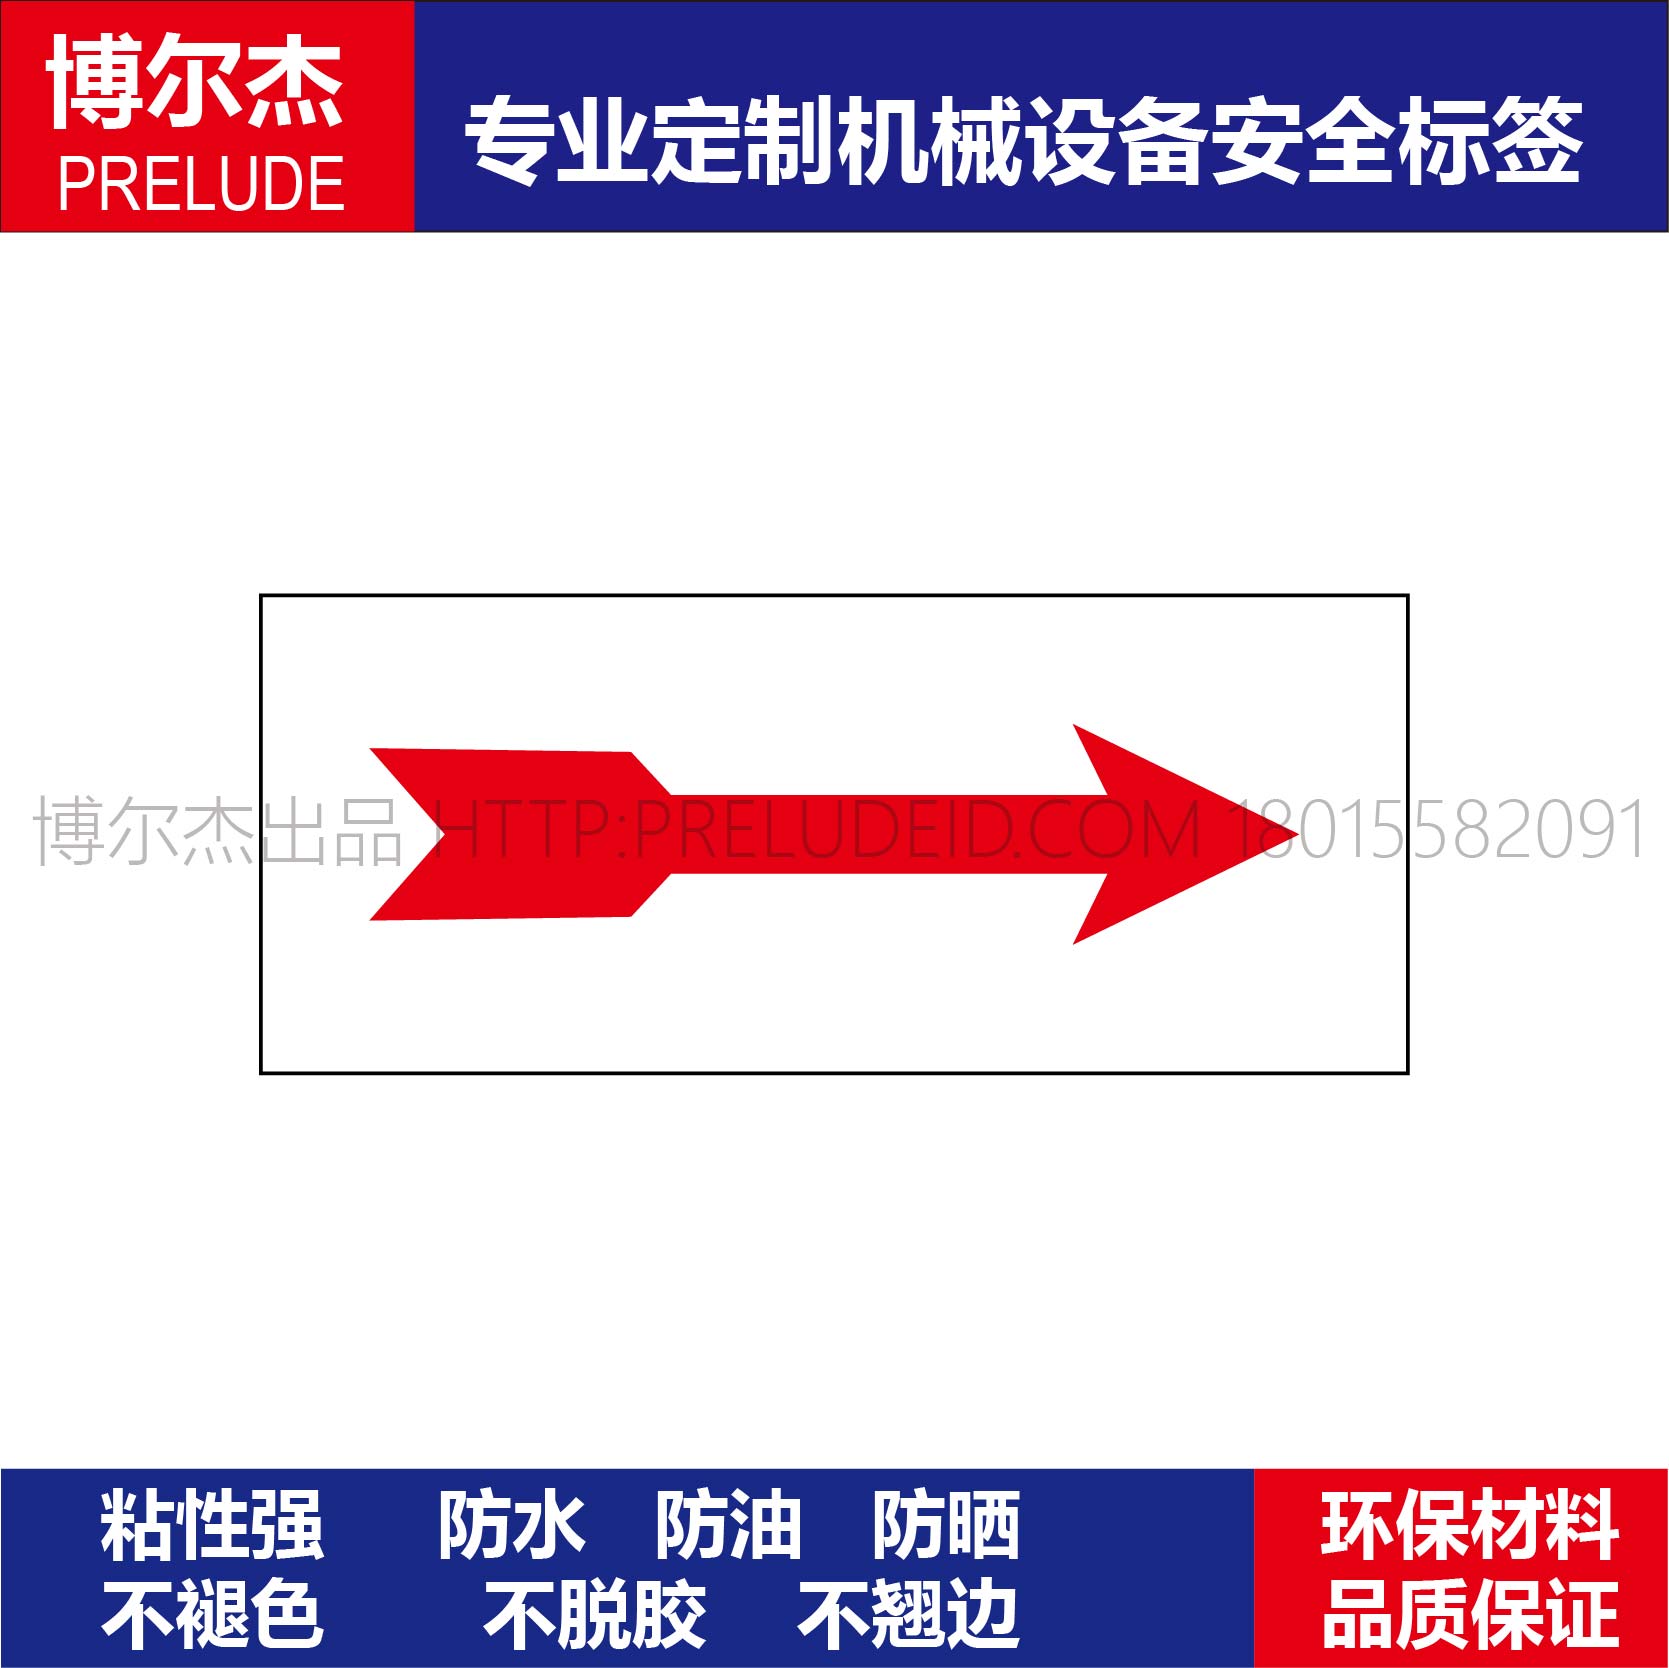 FX068博尔杰机器设备方向箭头标签-左右开关方向-红色箭头向右